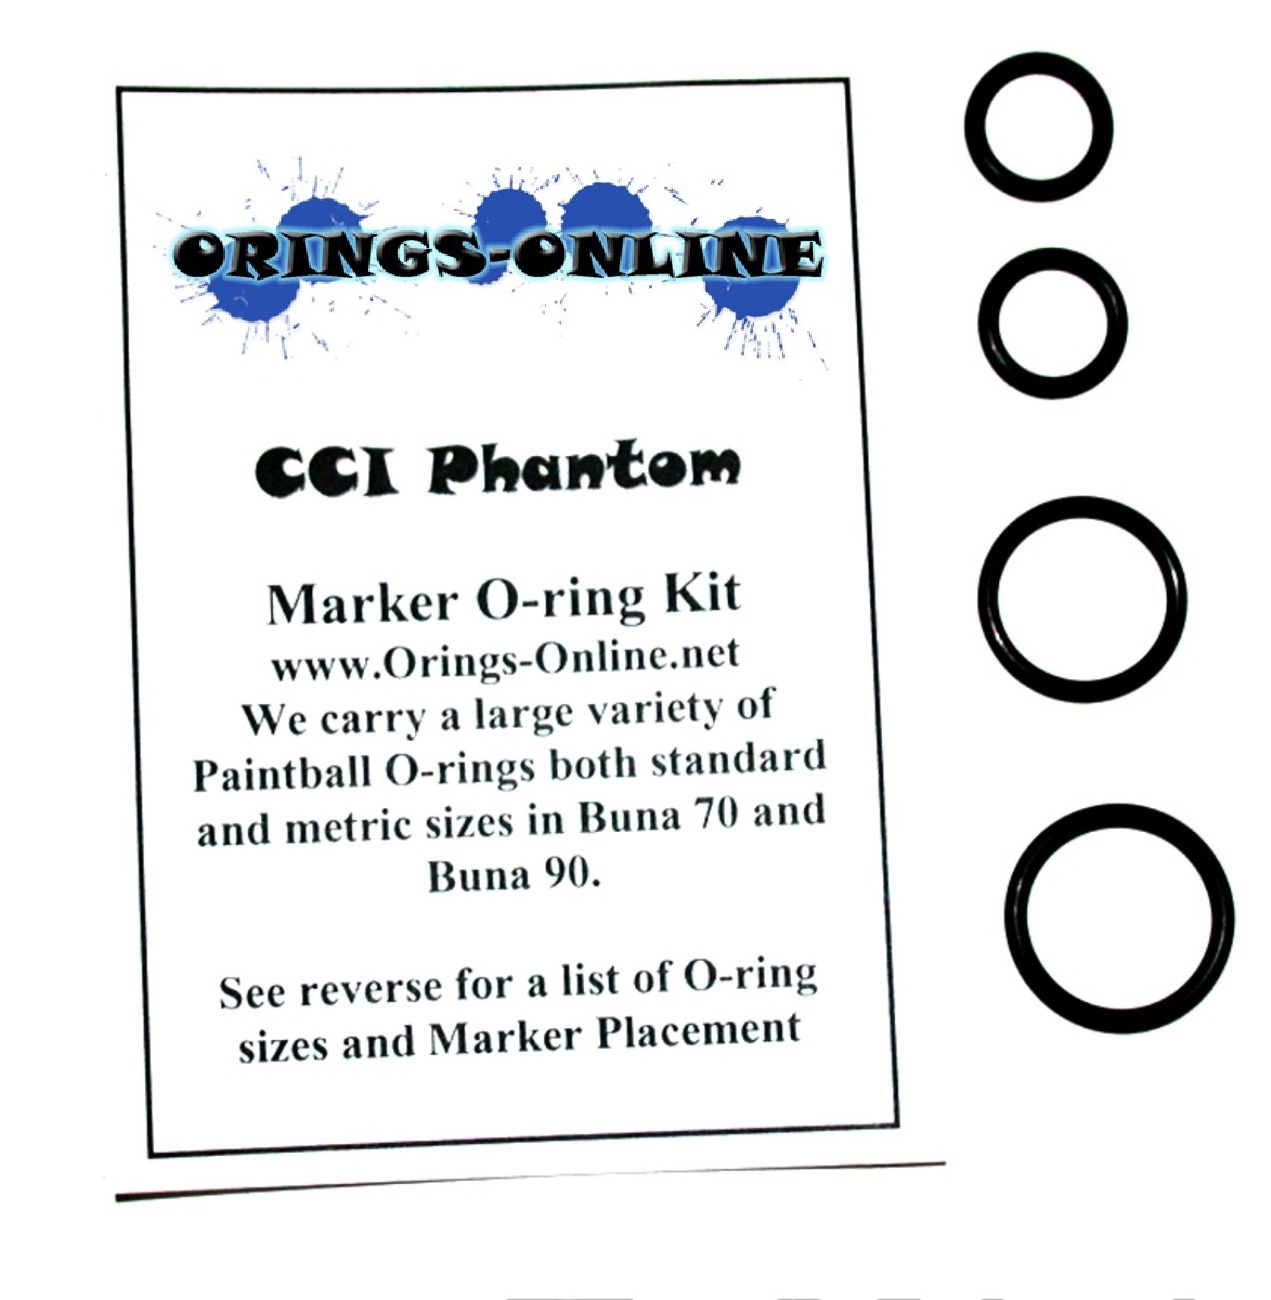 CCI Phantom Marker O-ring Kit